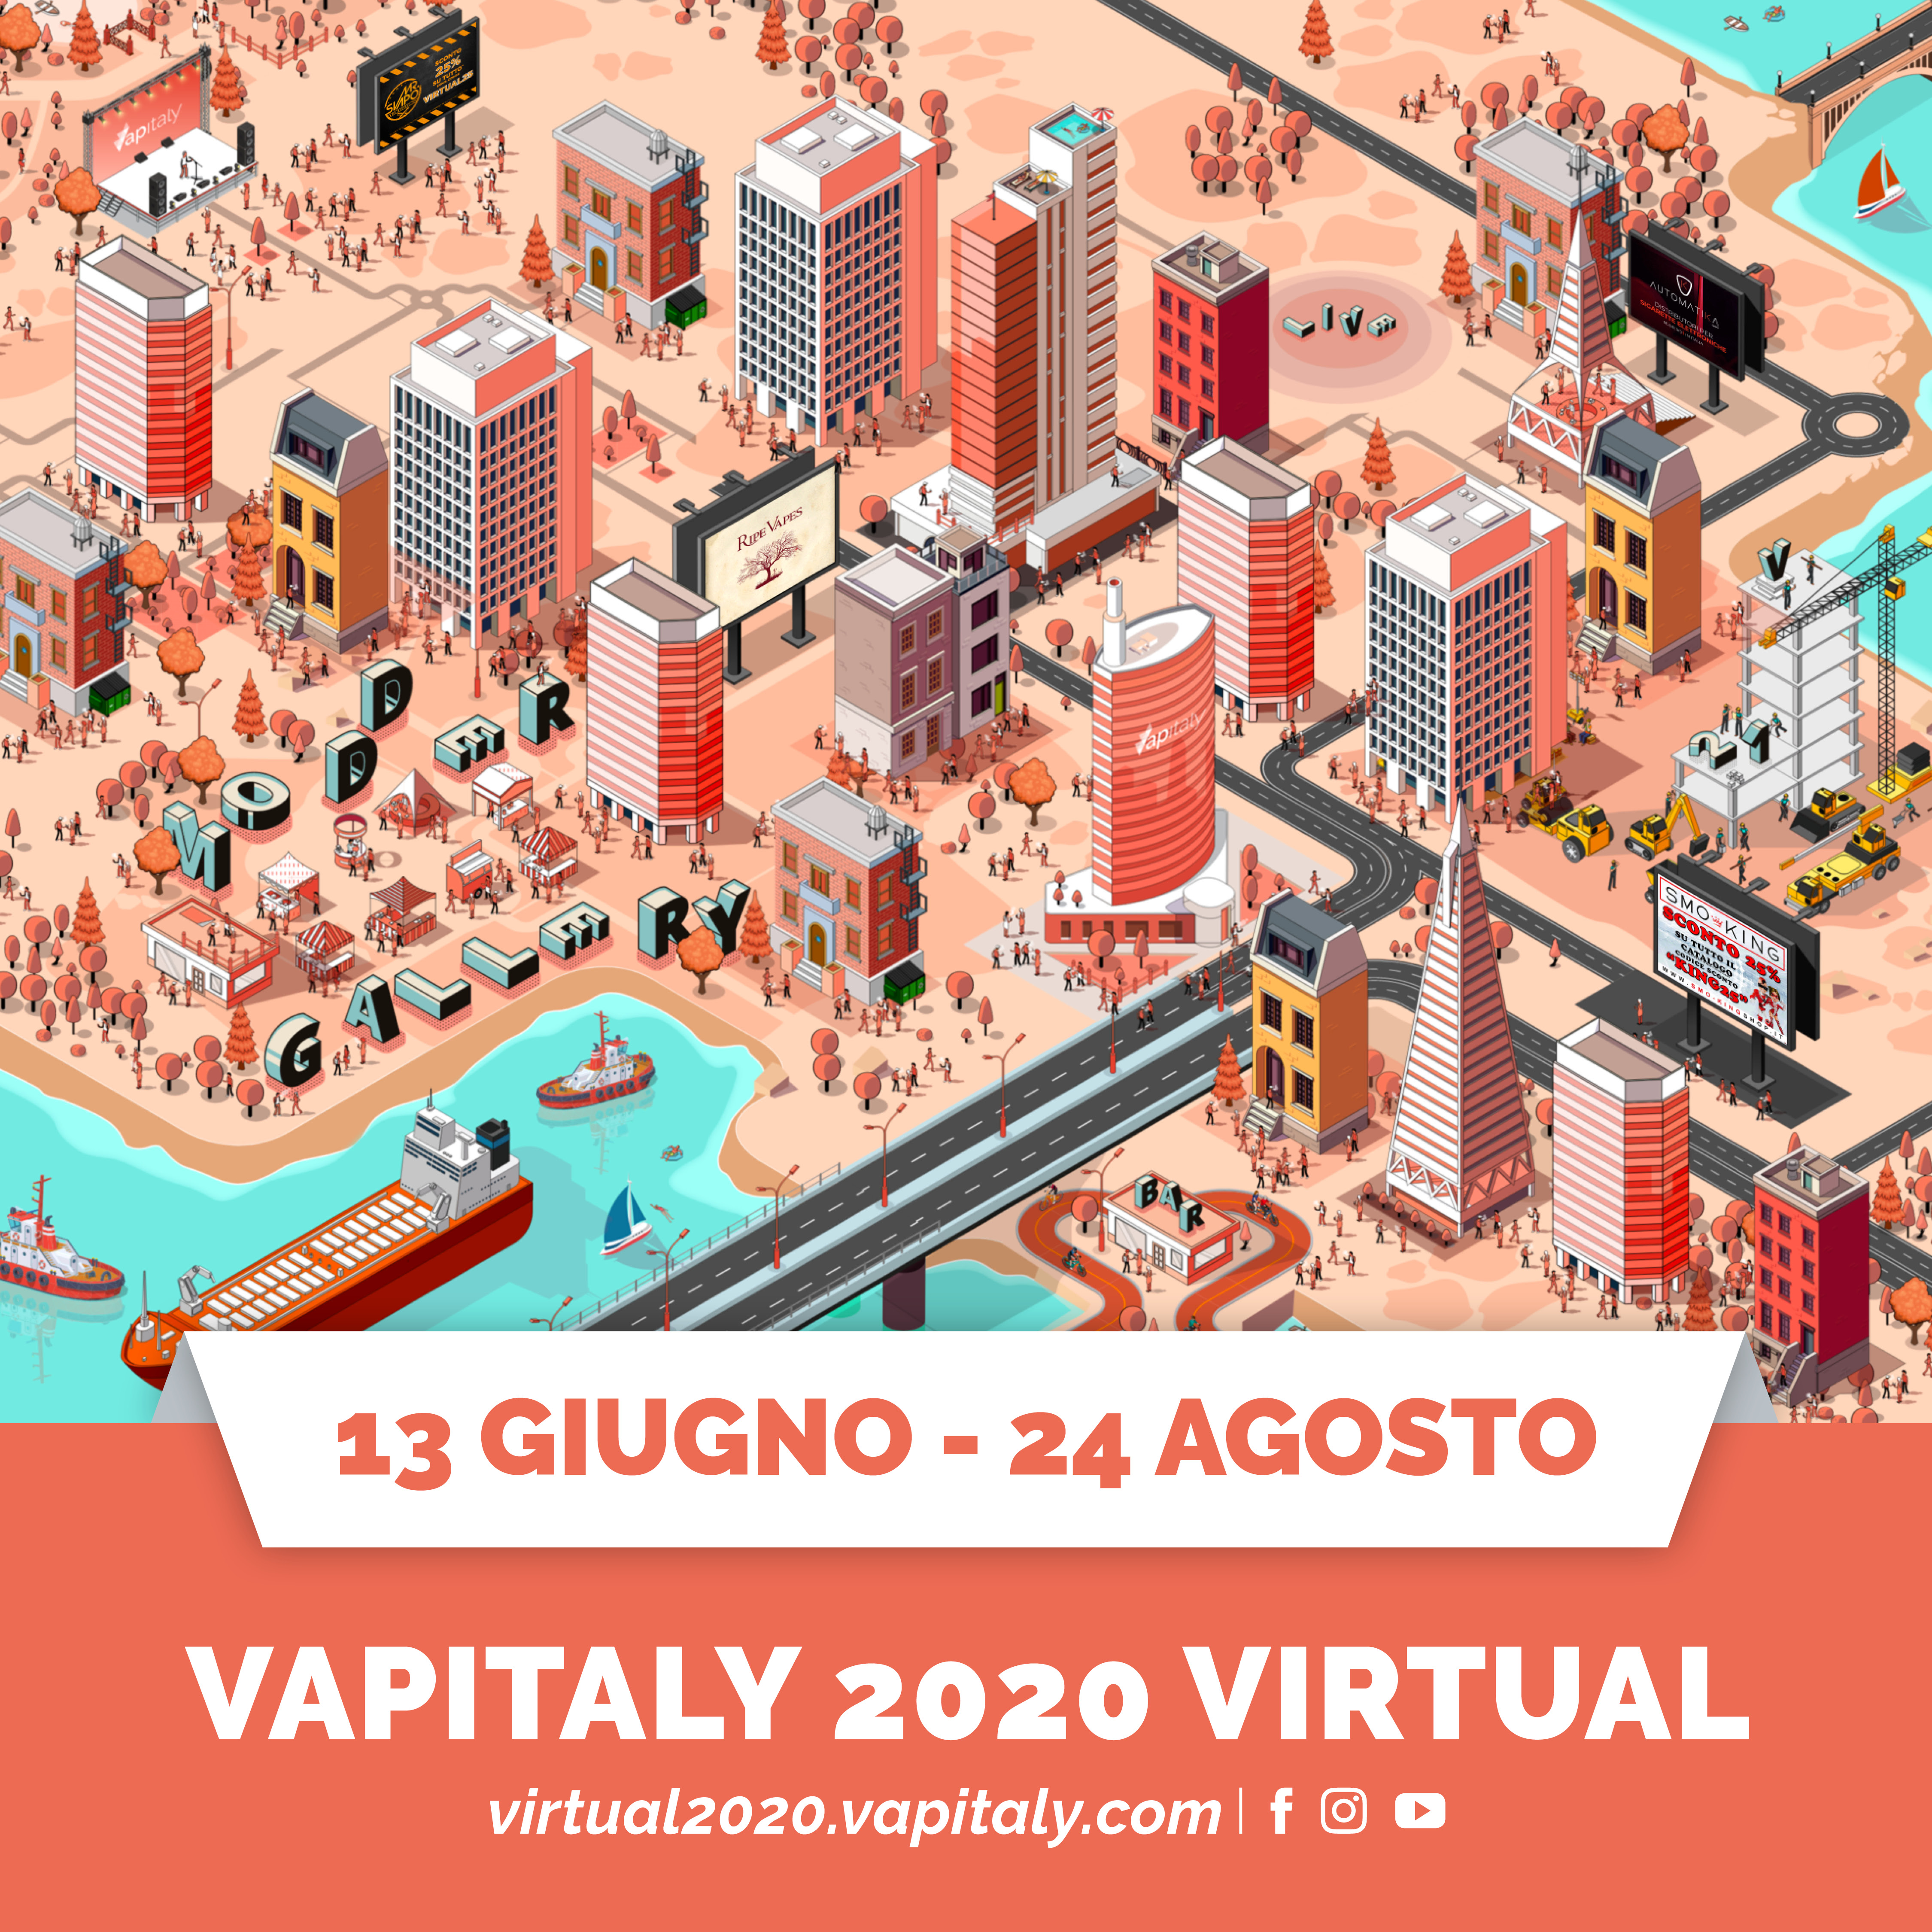 Vapitaly 2020 Virtual Online fino al 24 agosto